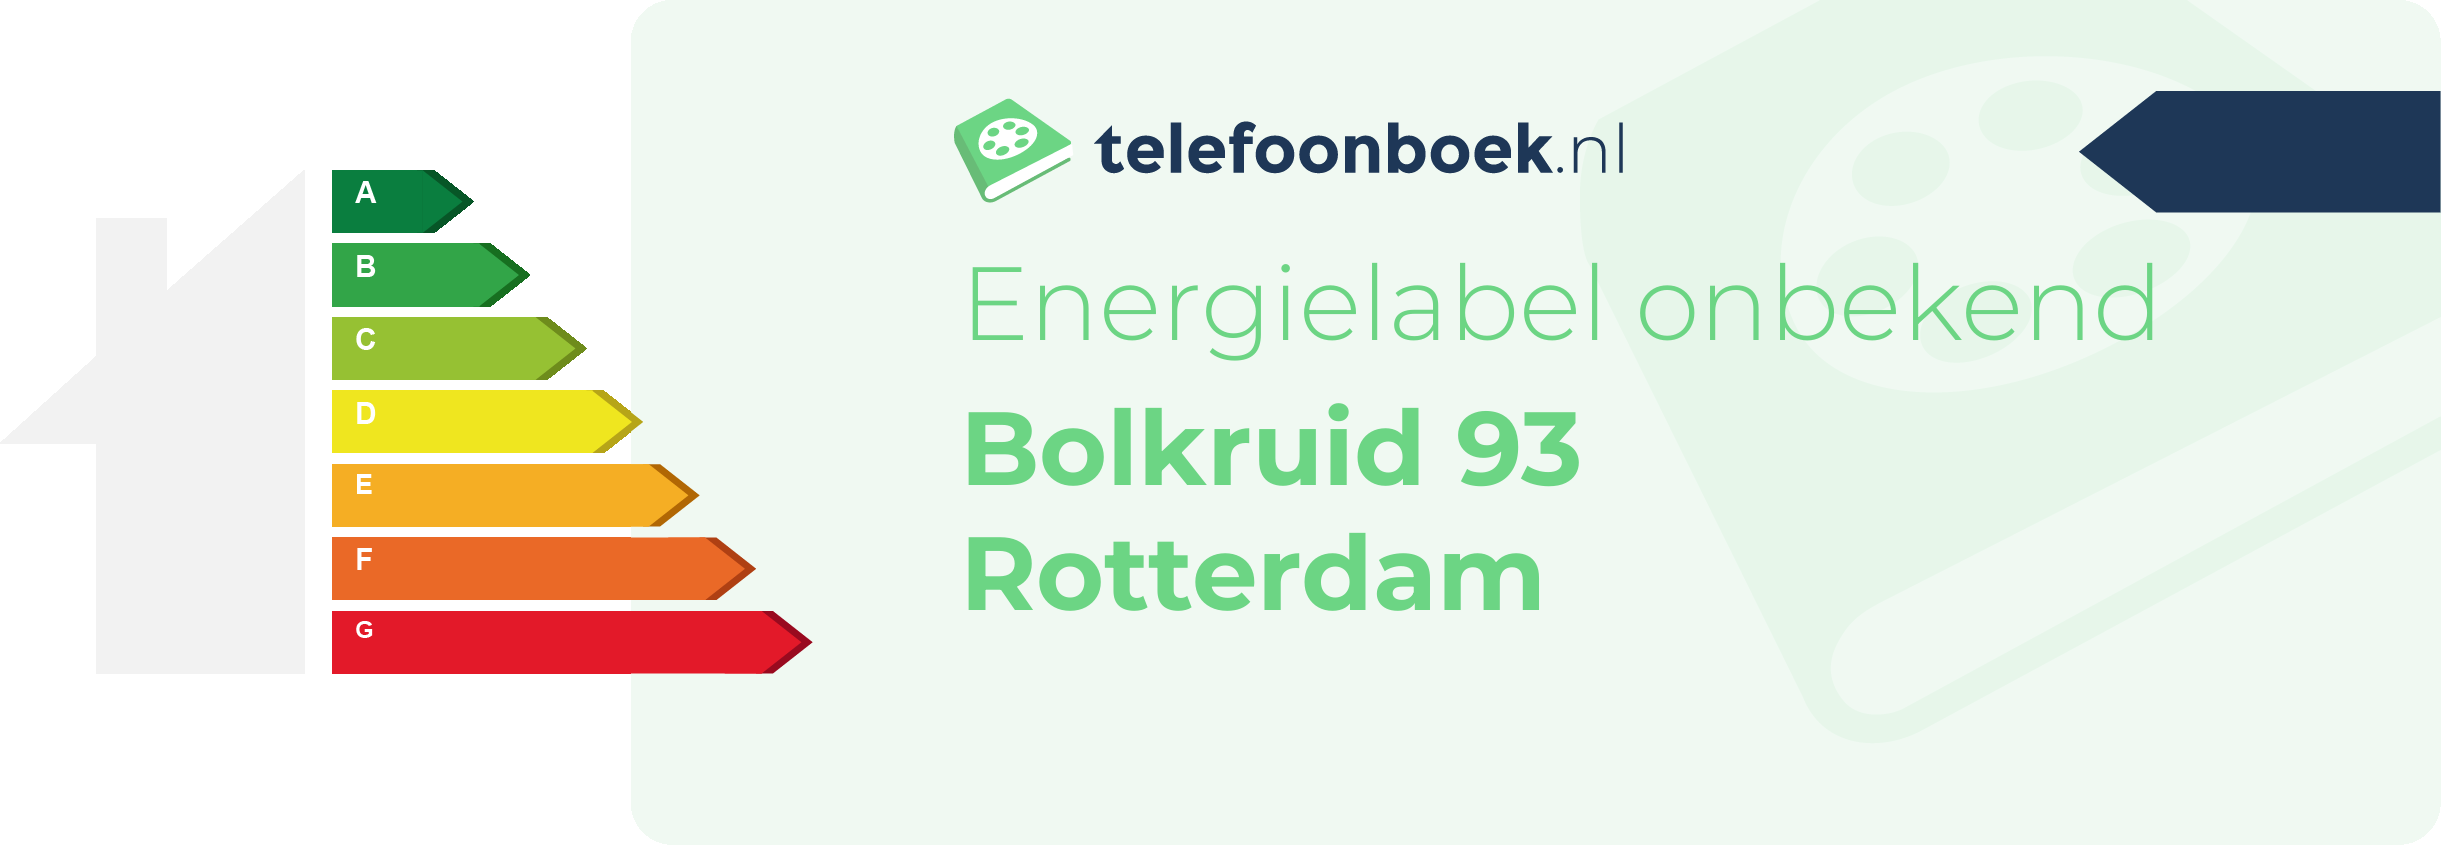 Energielabel Bolkruid 93 Rotterdam